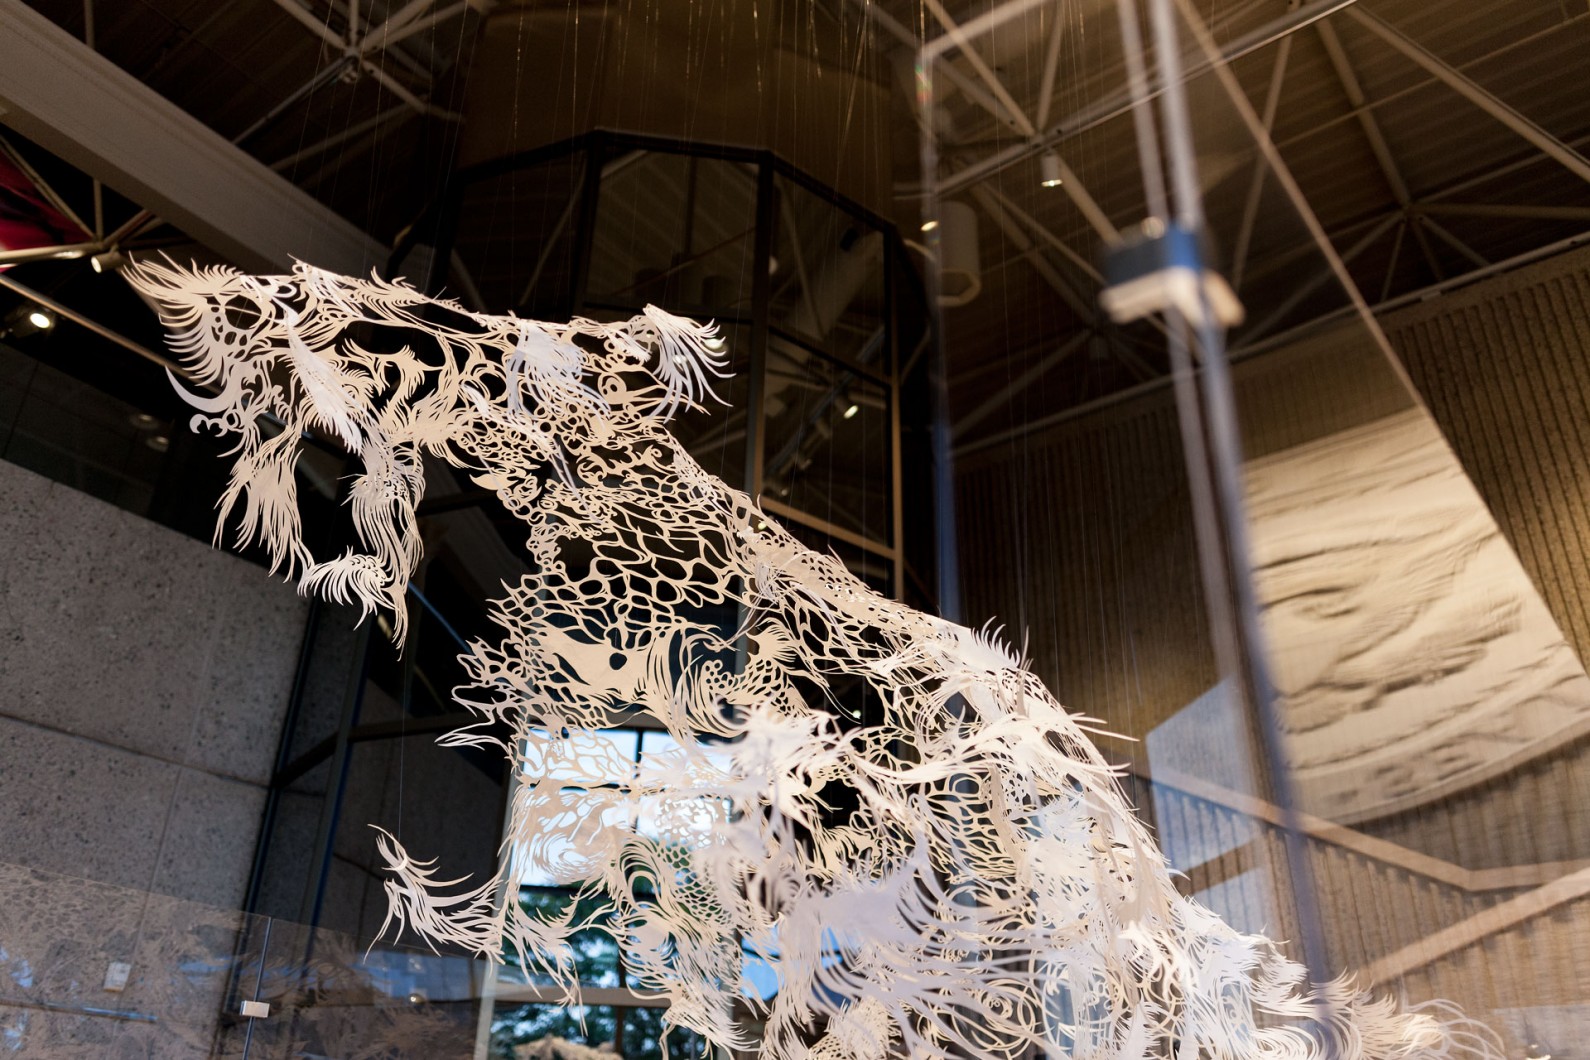 ArtPrize2014 Installation Paper Cut Sculpture Nahoko Kojima Byaku Swimming Polar Bear ArtPrize